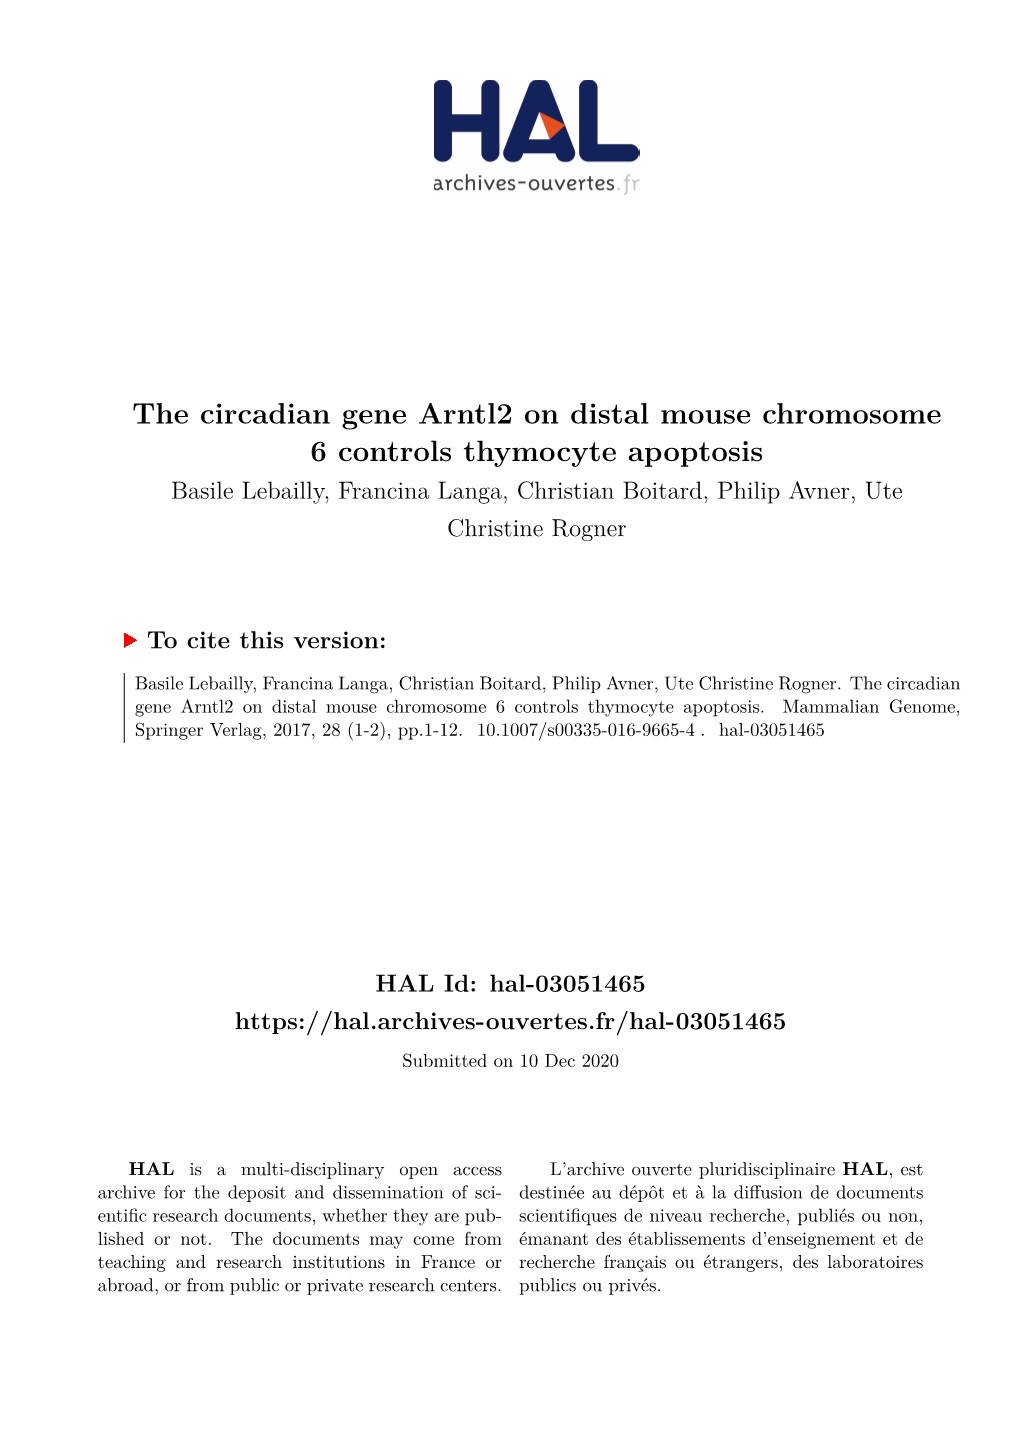 The Circadian Gene Arntl2 on Distal Mouse Chromosome 6 Controls